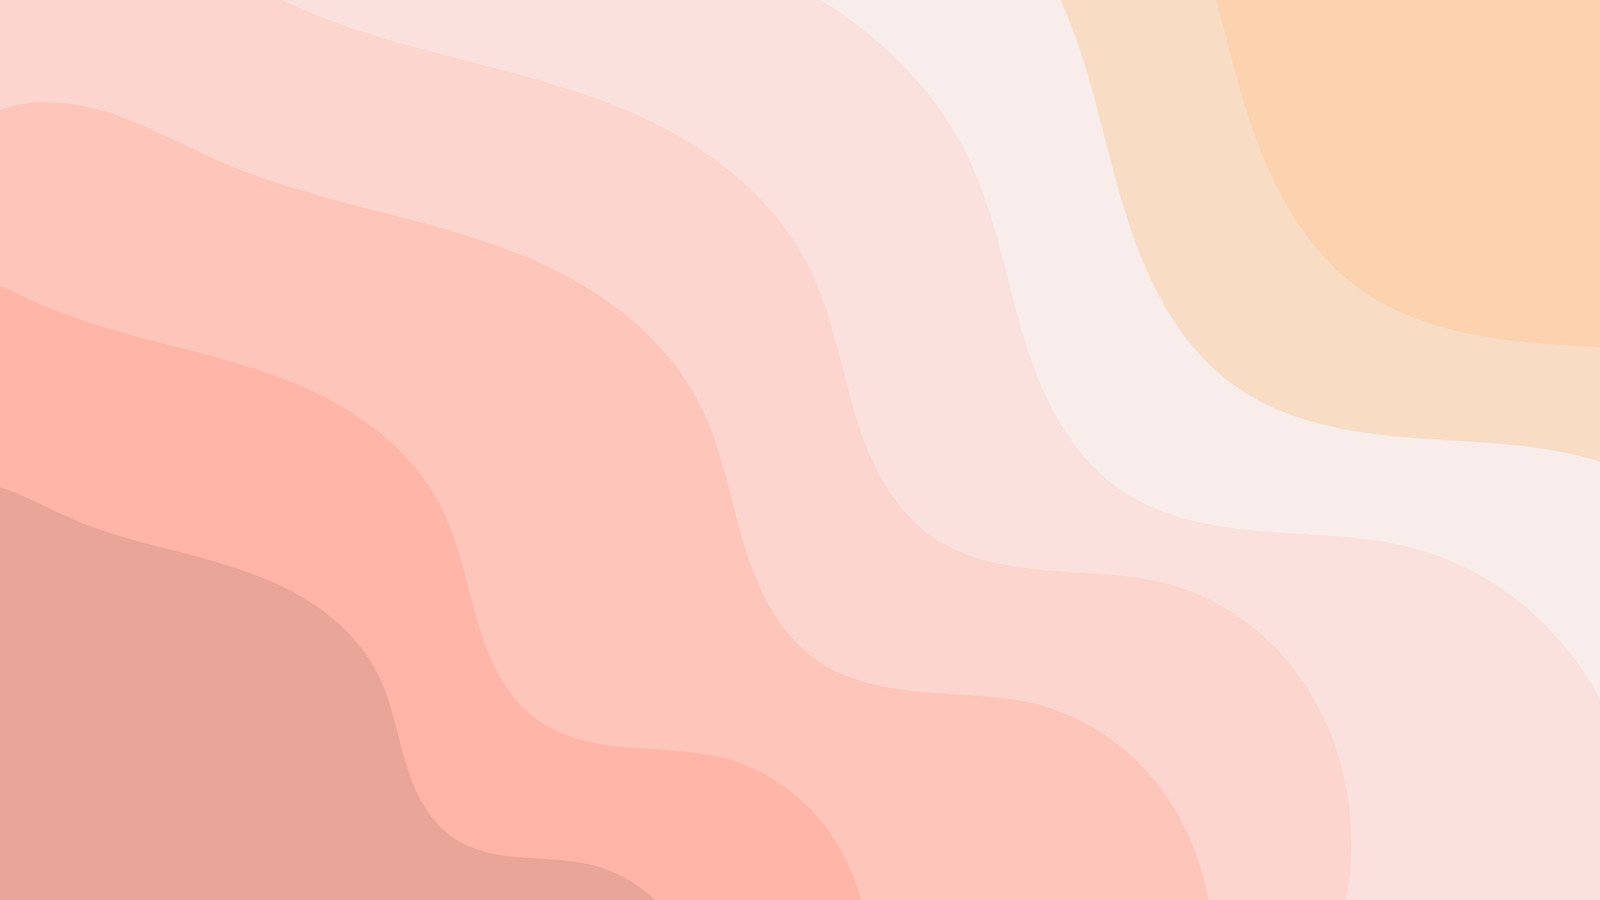 Aesthetic Minimalist Pink Waves Background